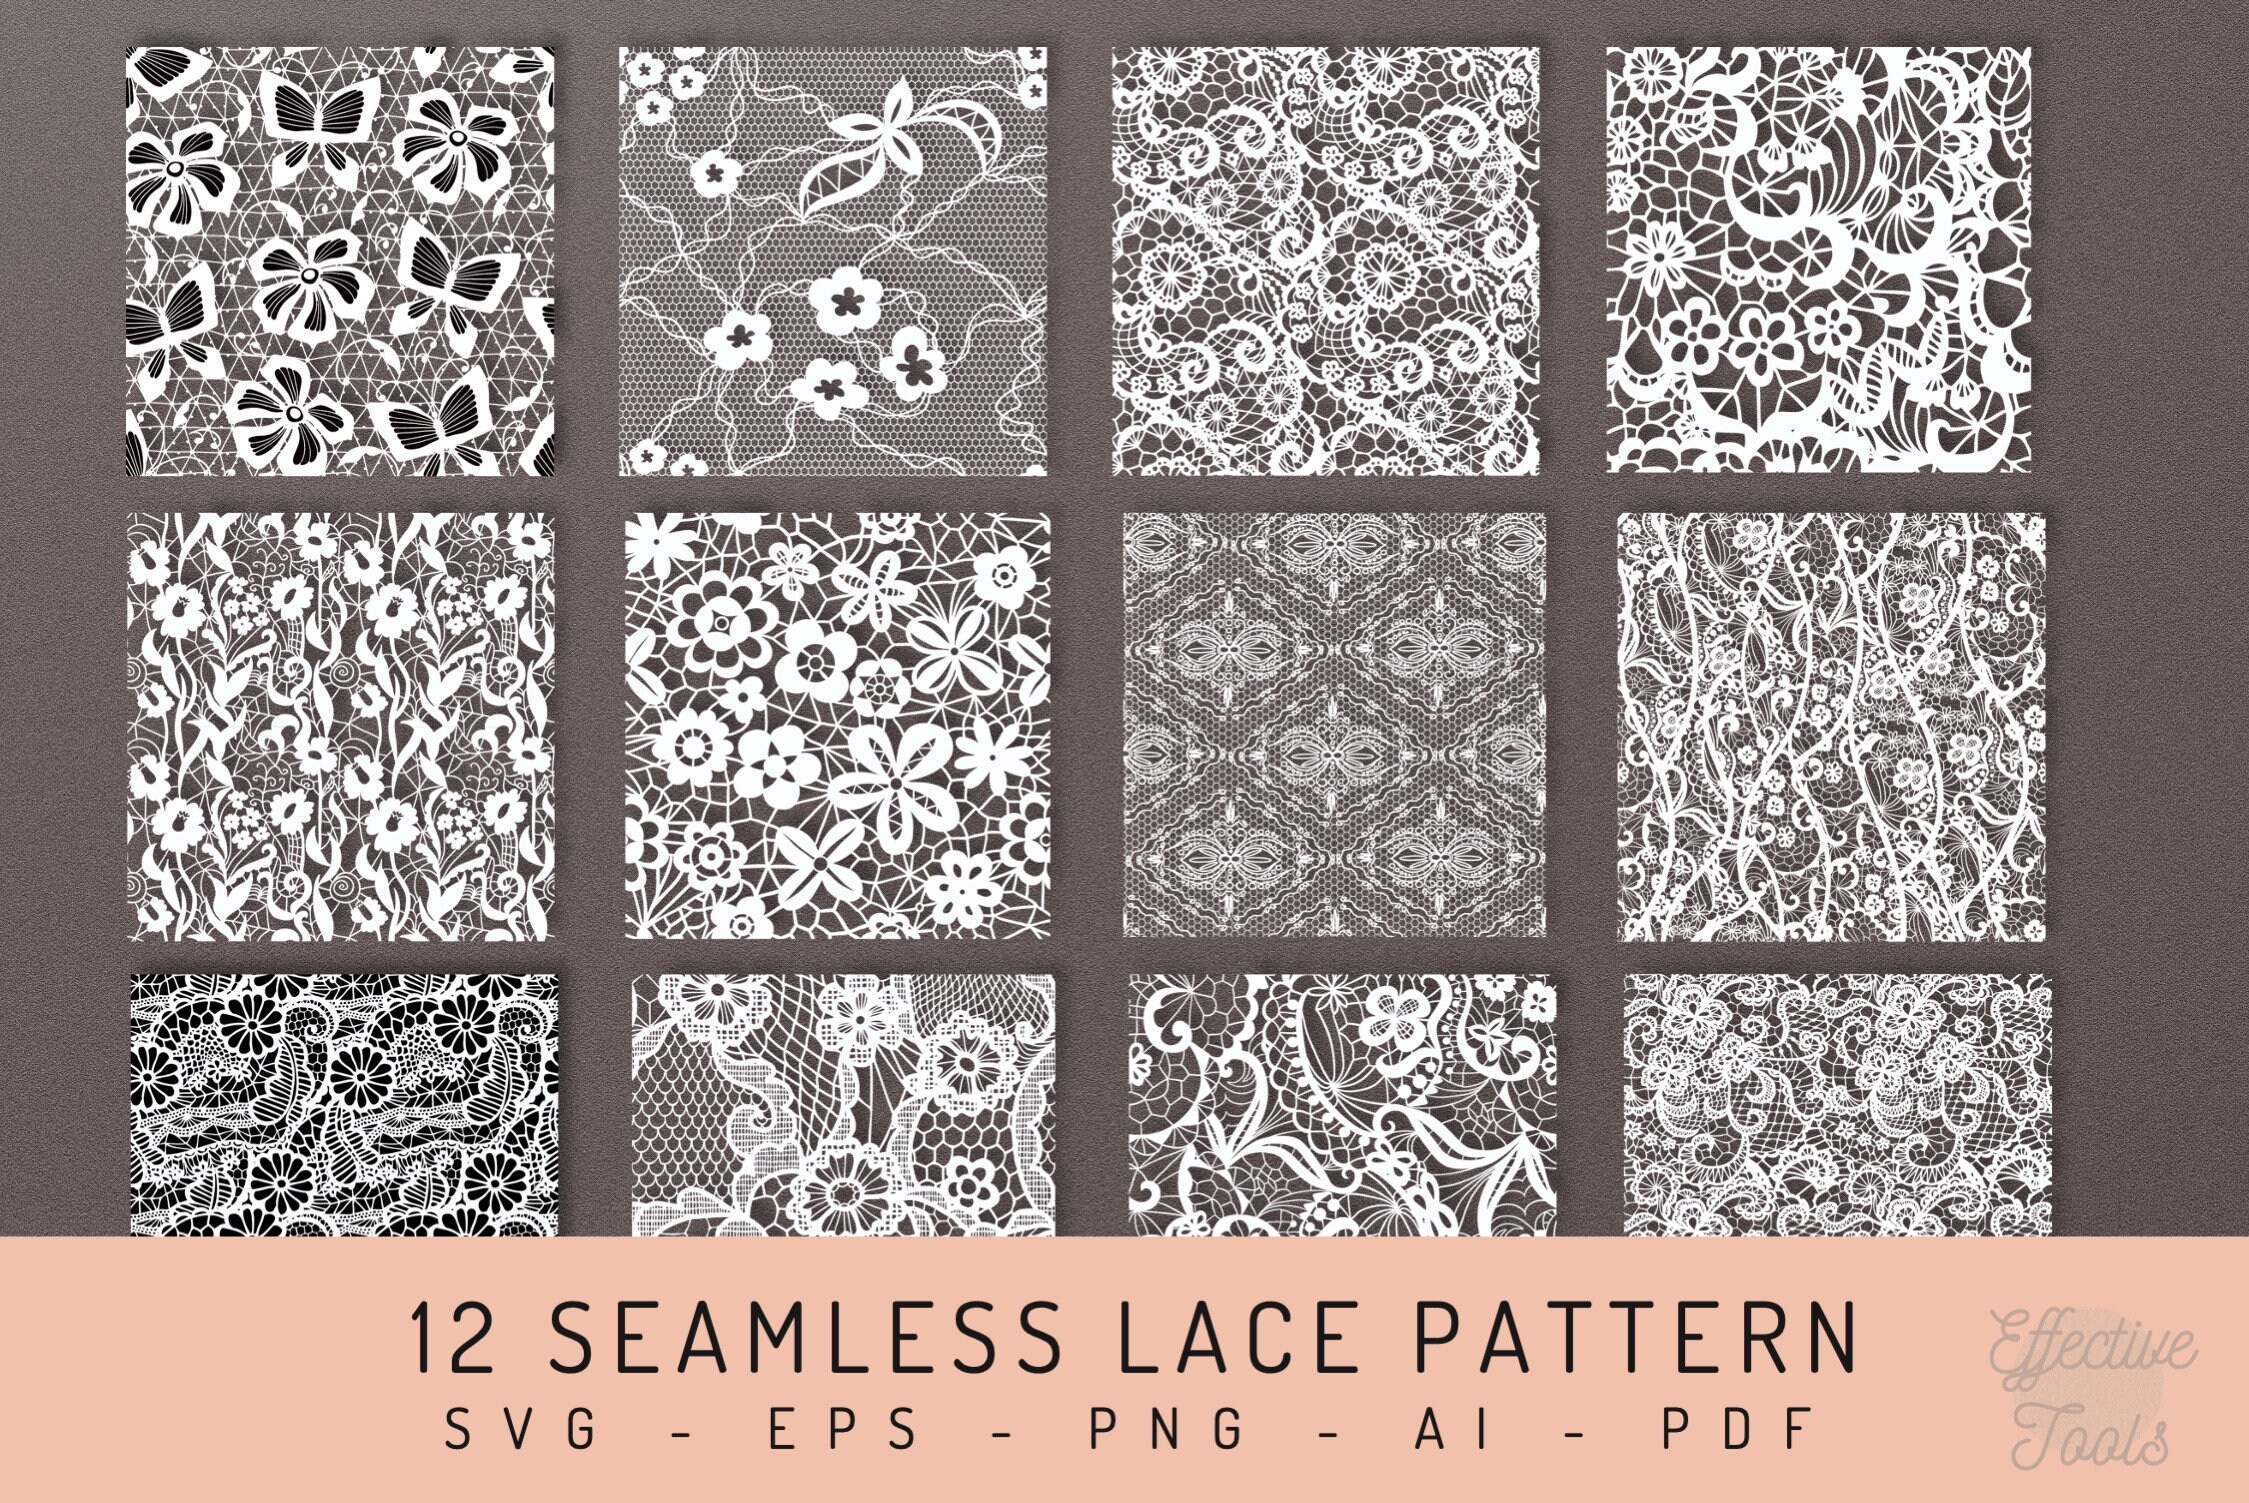 12 Seamless Lace Pattern Svg Eps Png Ai Pdf | Etsy Australia